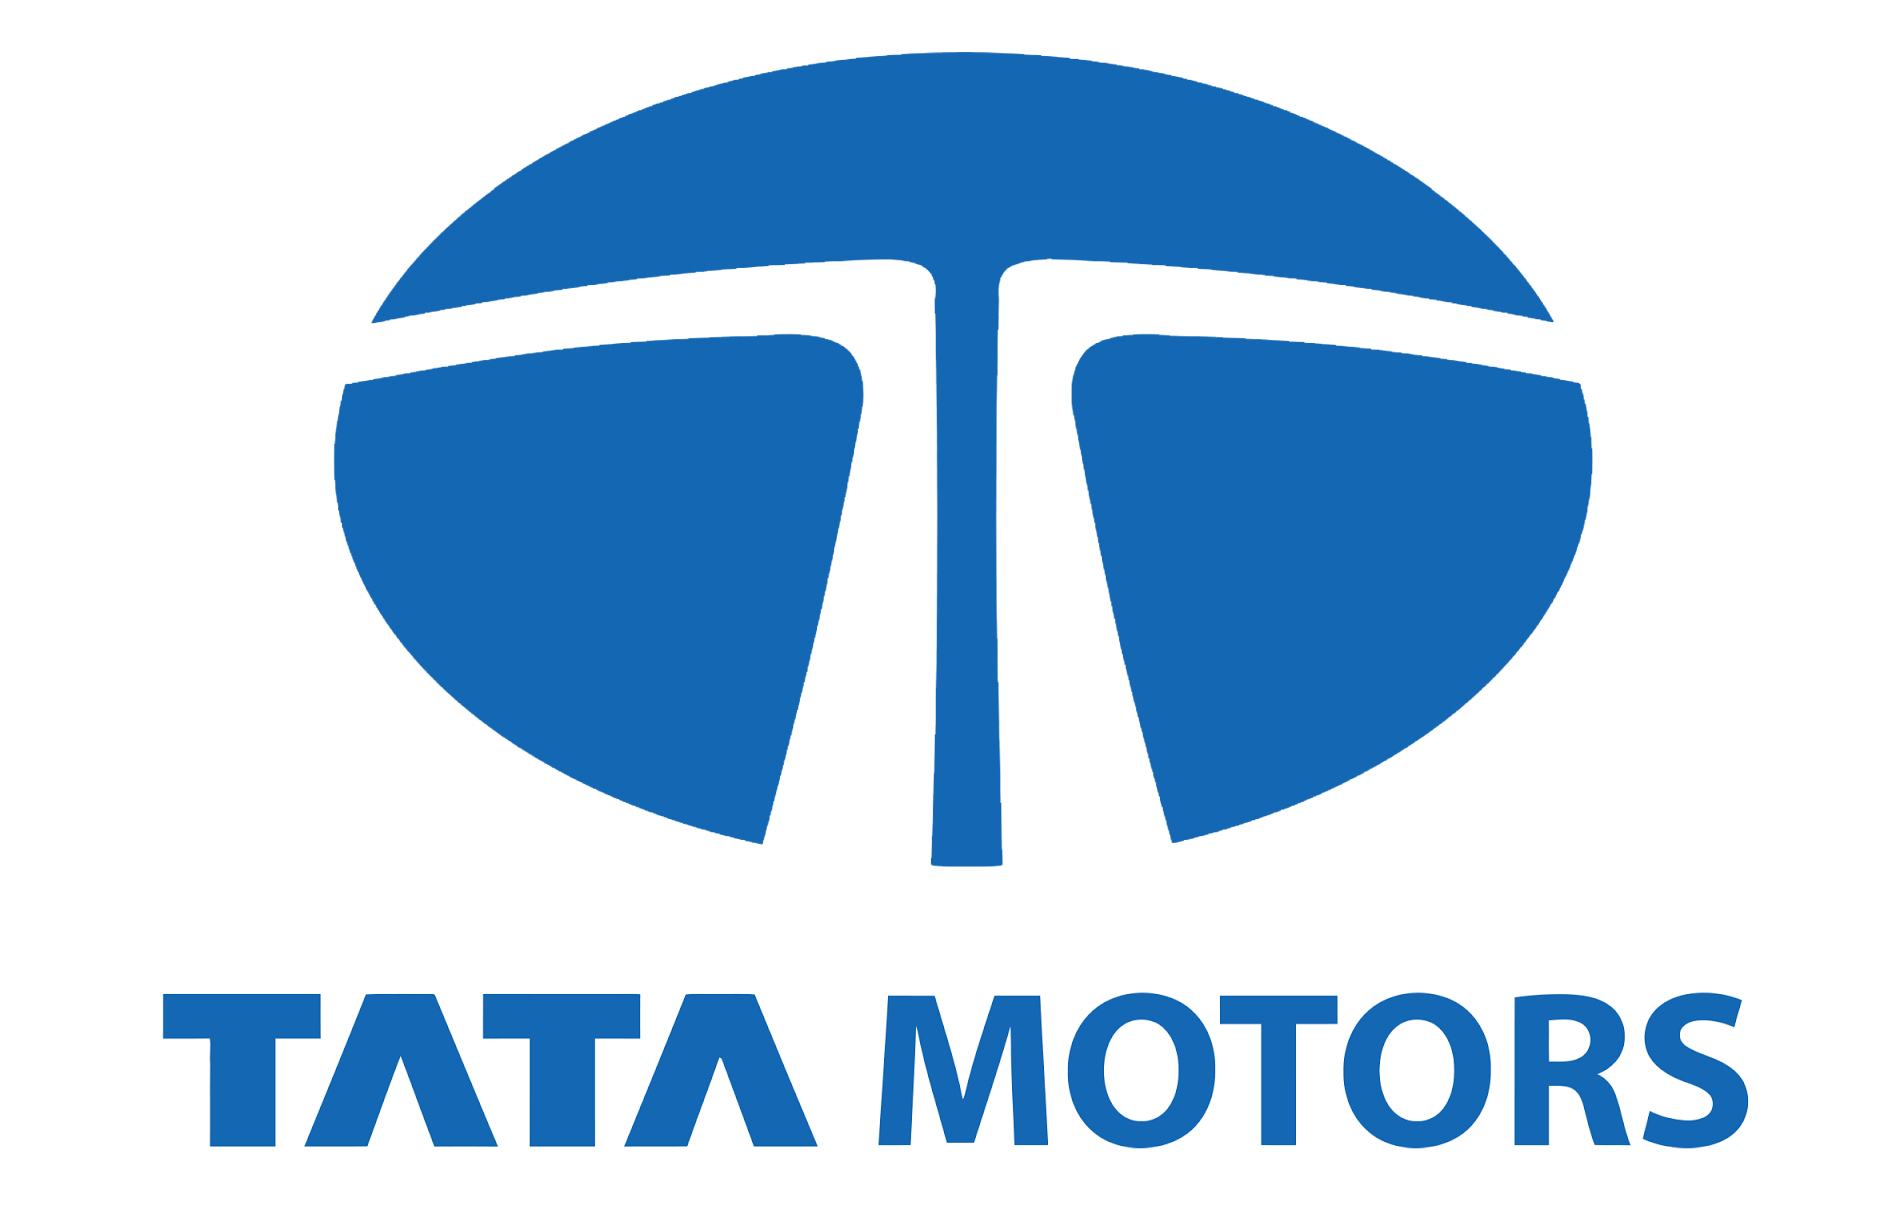 Tata Motors Cars Showroom - Rajarshi Tata Logo